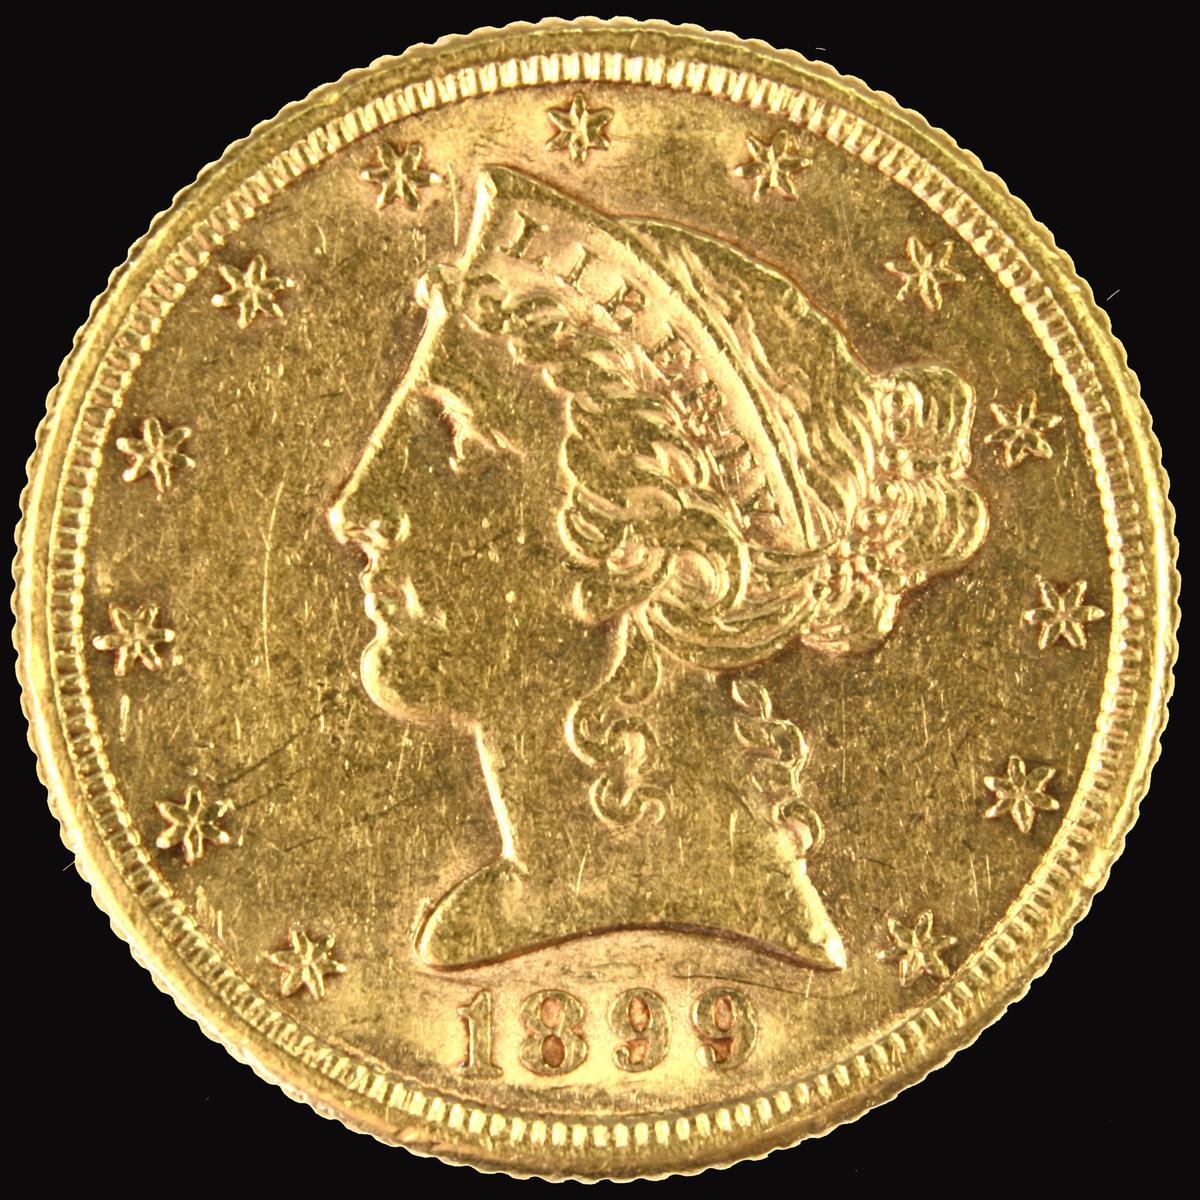 1899-S U.S. $5 Liberty head gold coin